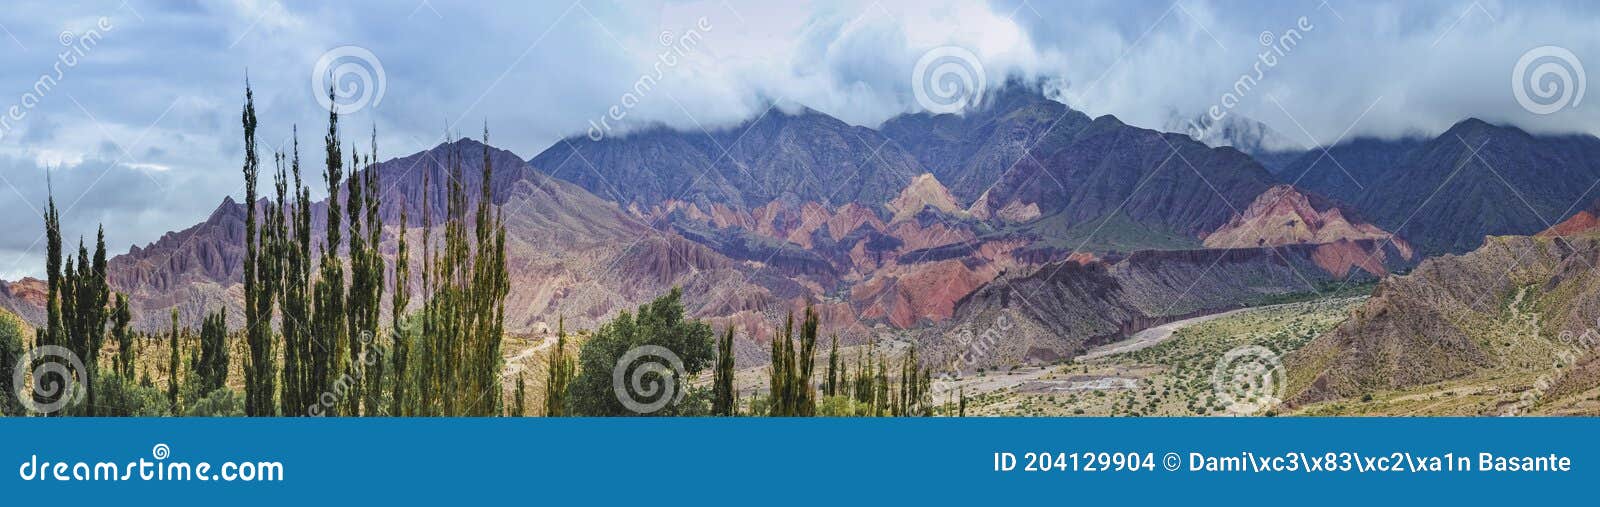 valley landscape in tilcara in jujuy - argentina